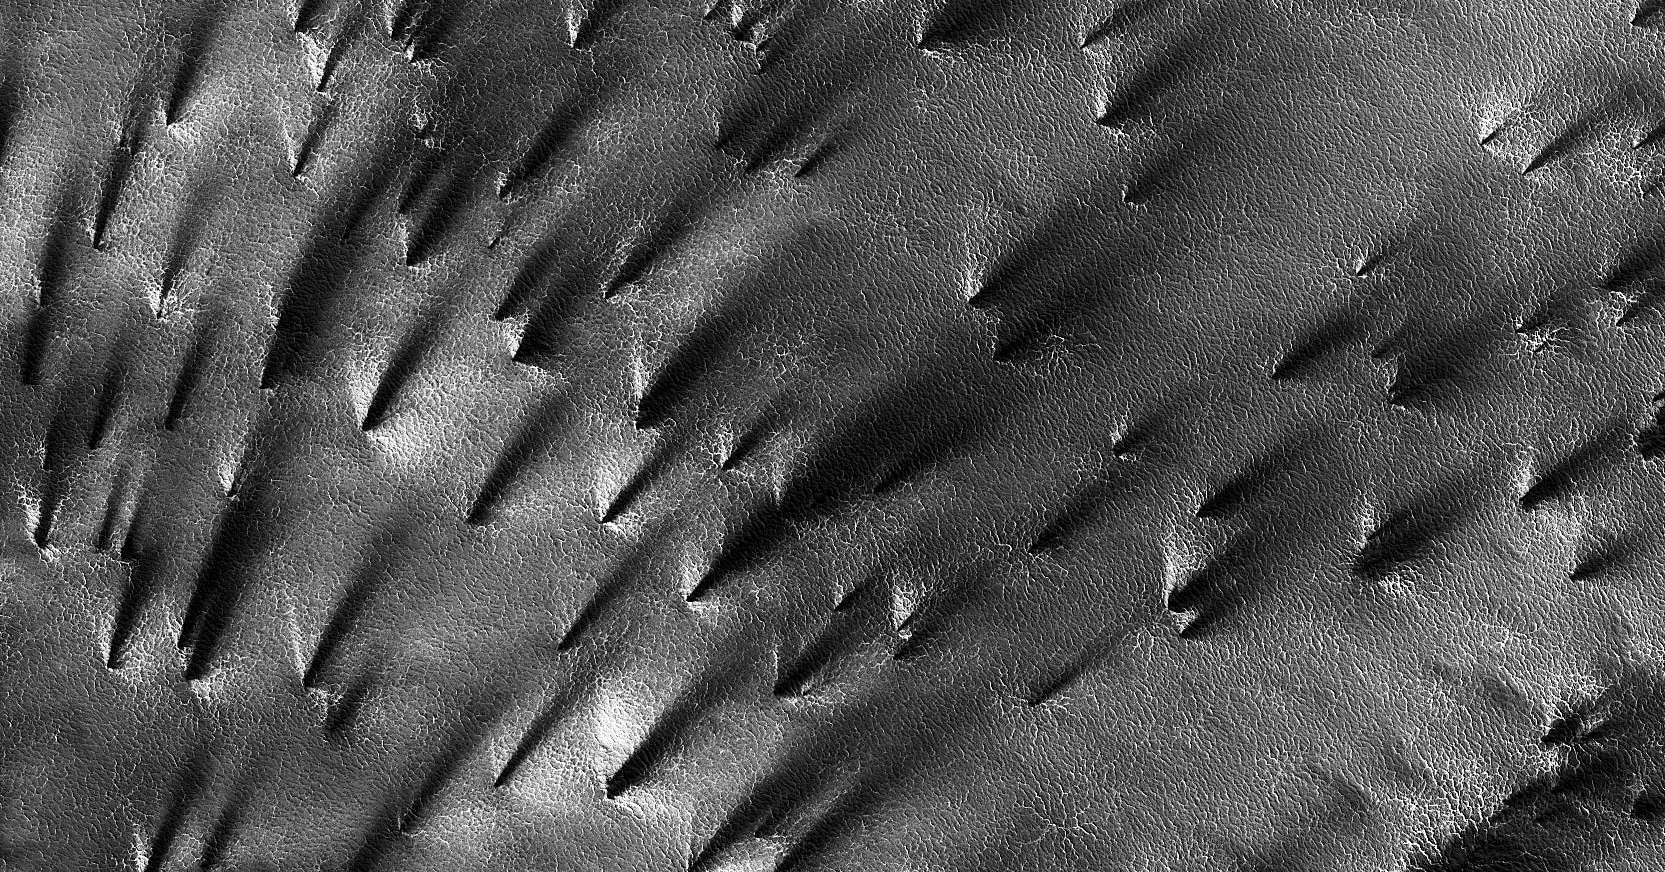 HiRISE camera view of strange fan-like sprays of dark material erupting from the ground near the south pole of Mars. Credit: NASA/JPL/UArizona